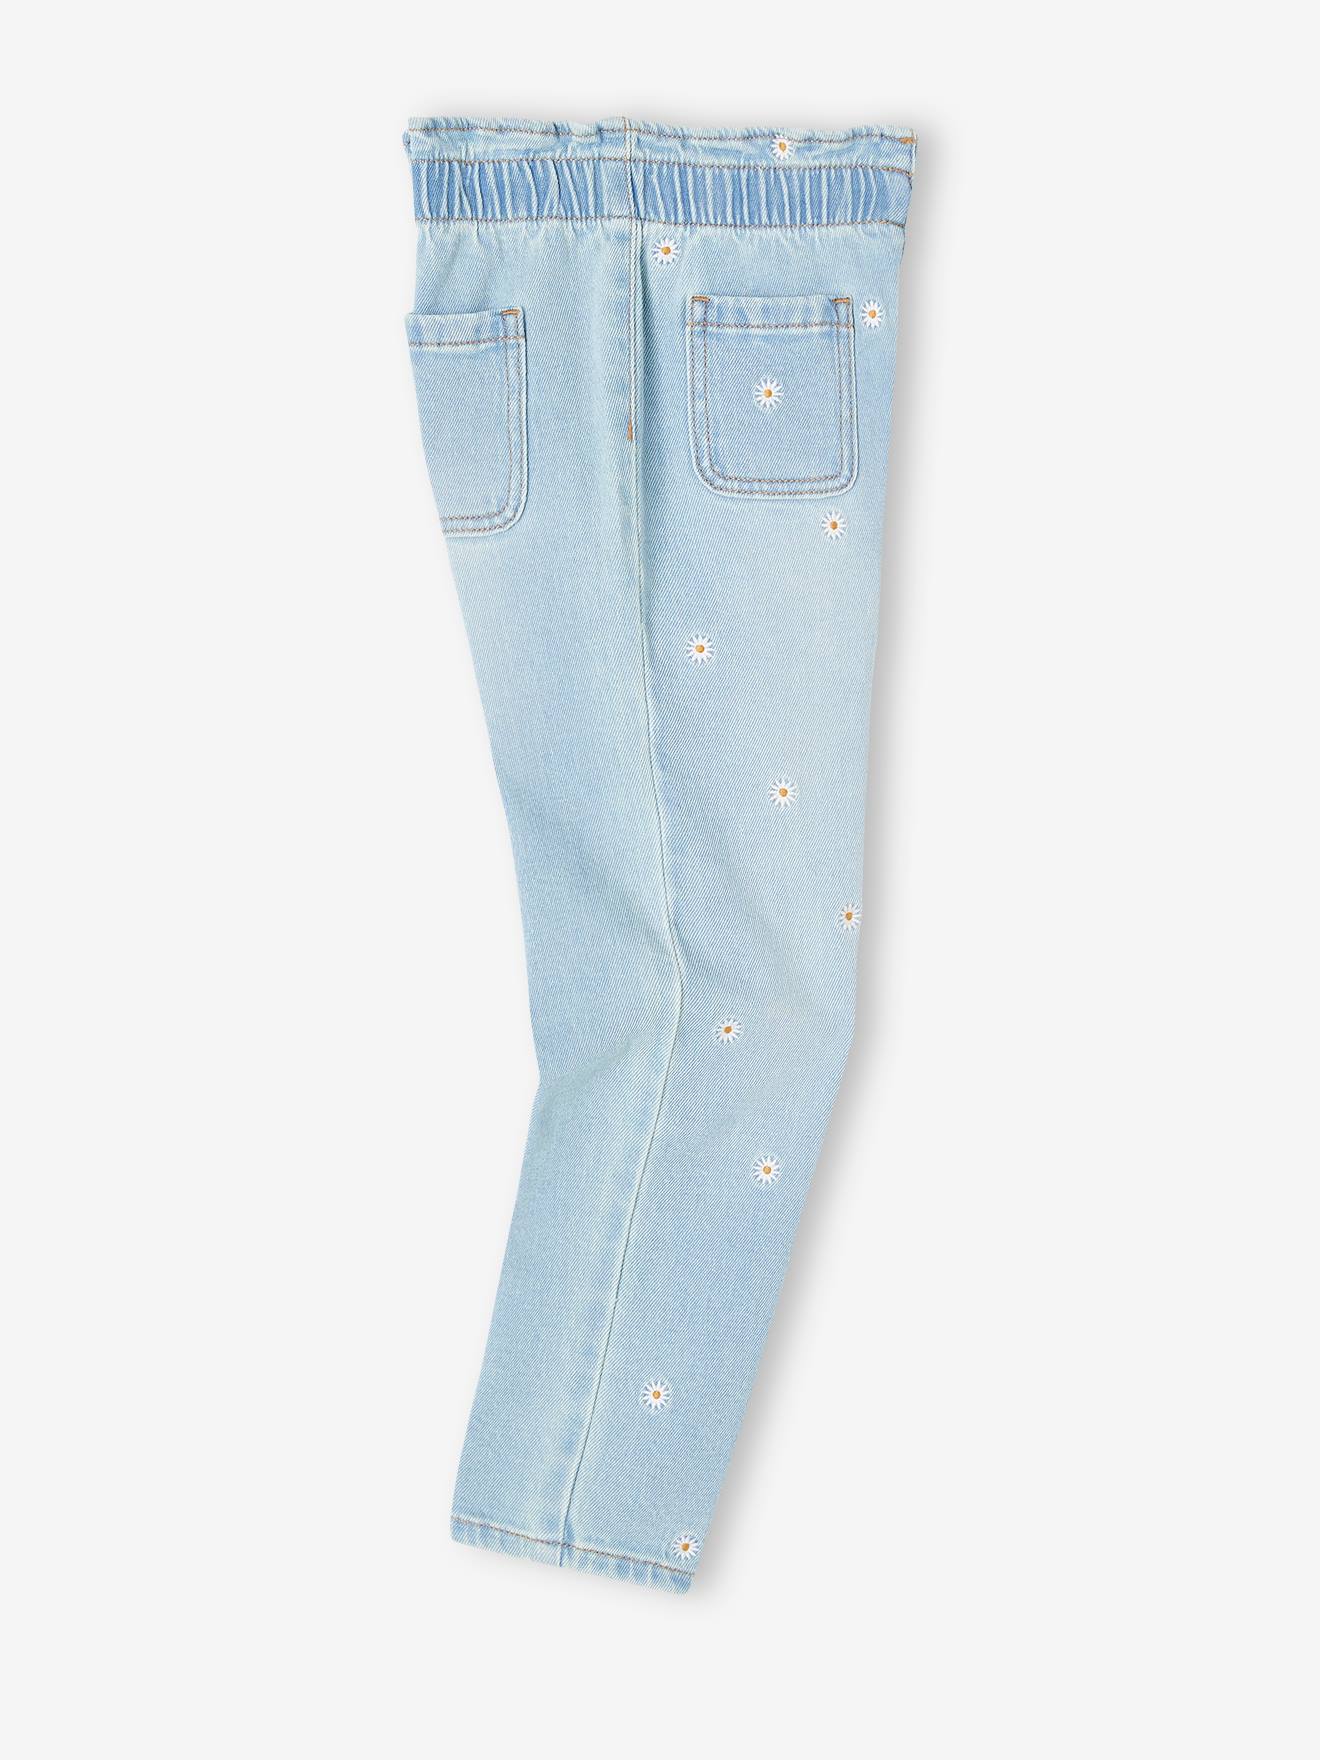 Paperbag Jeans, Embroidered Flowers, for Girls - denim blue, Girls